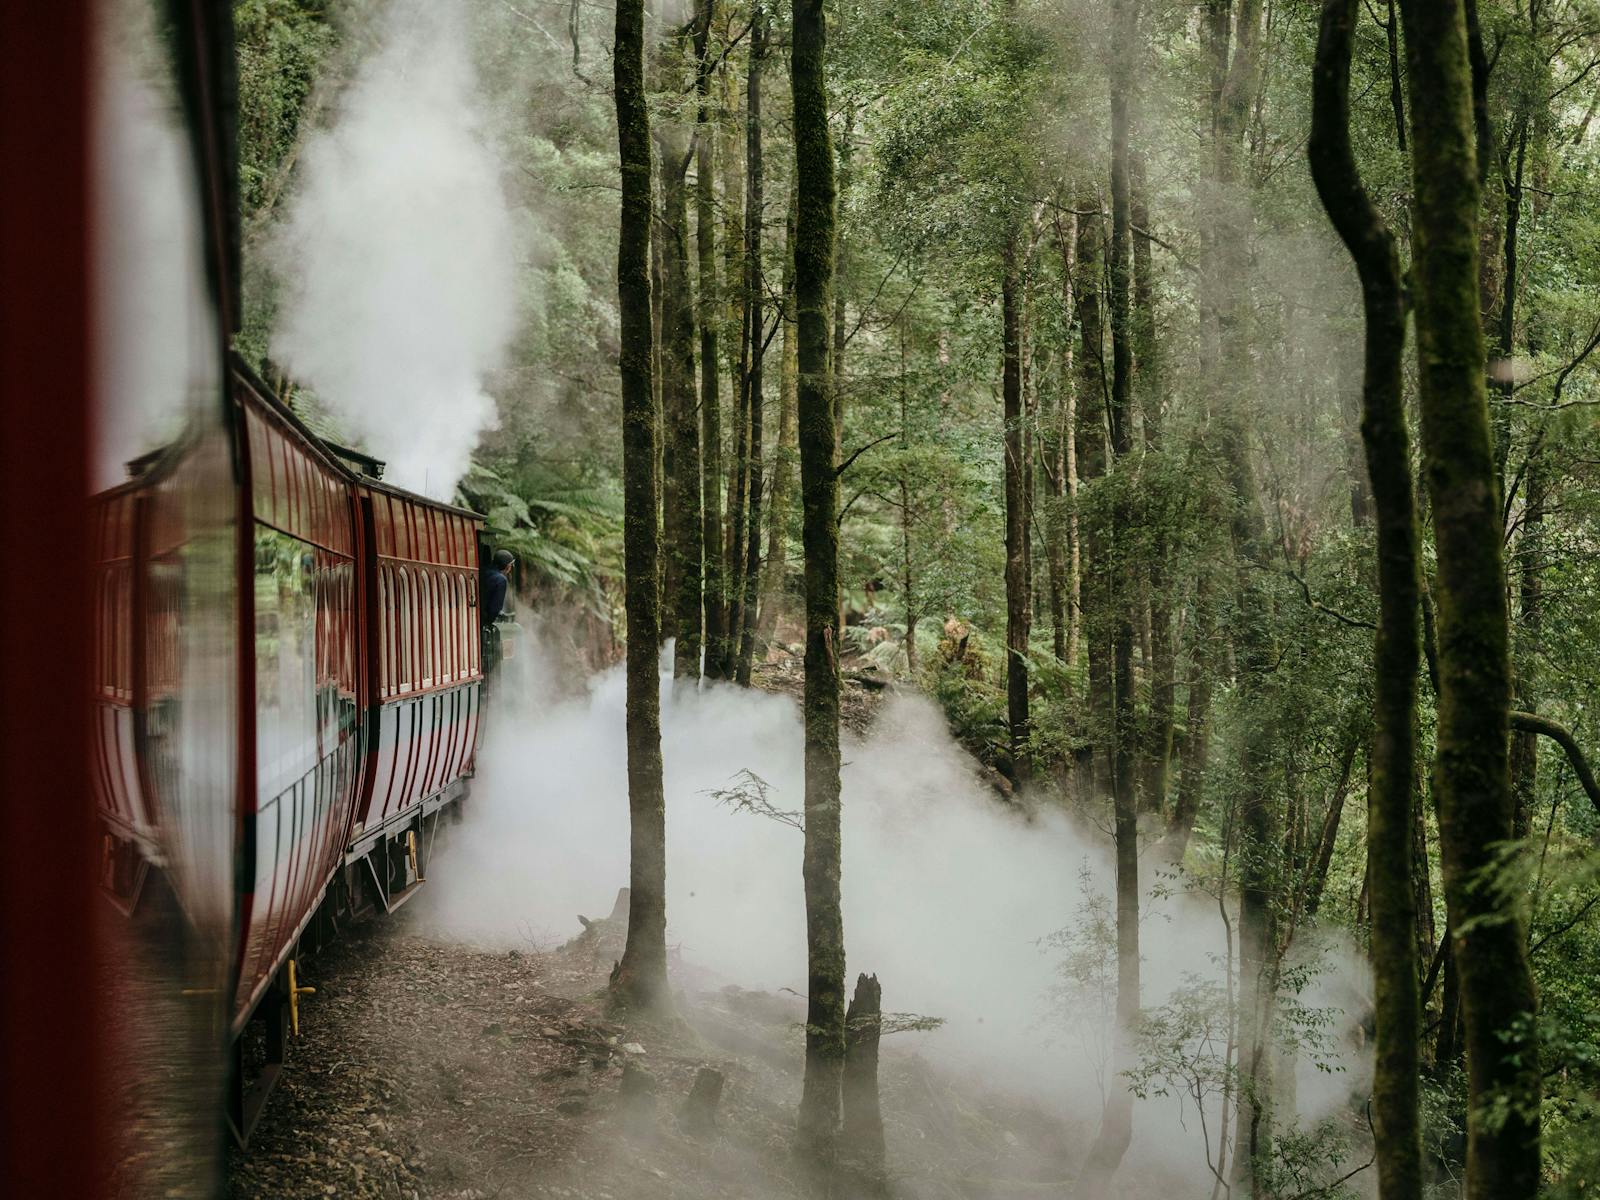 Train snakes through the rainforest